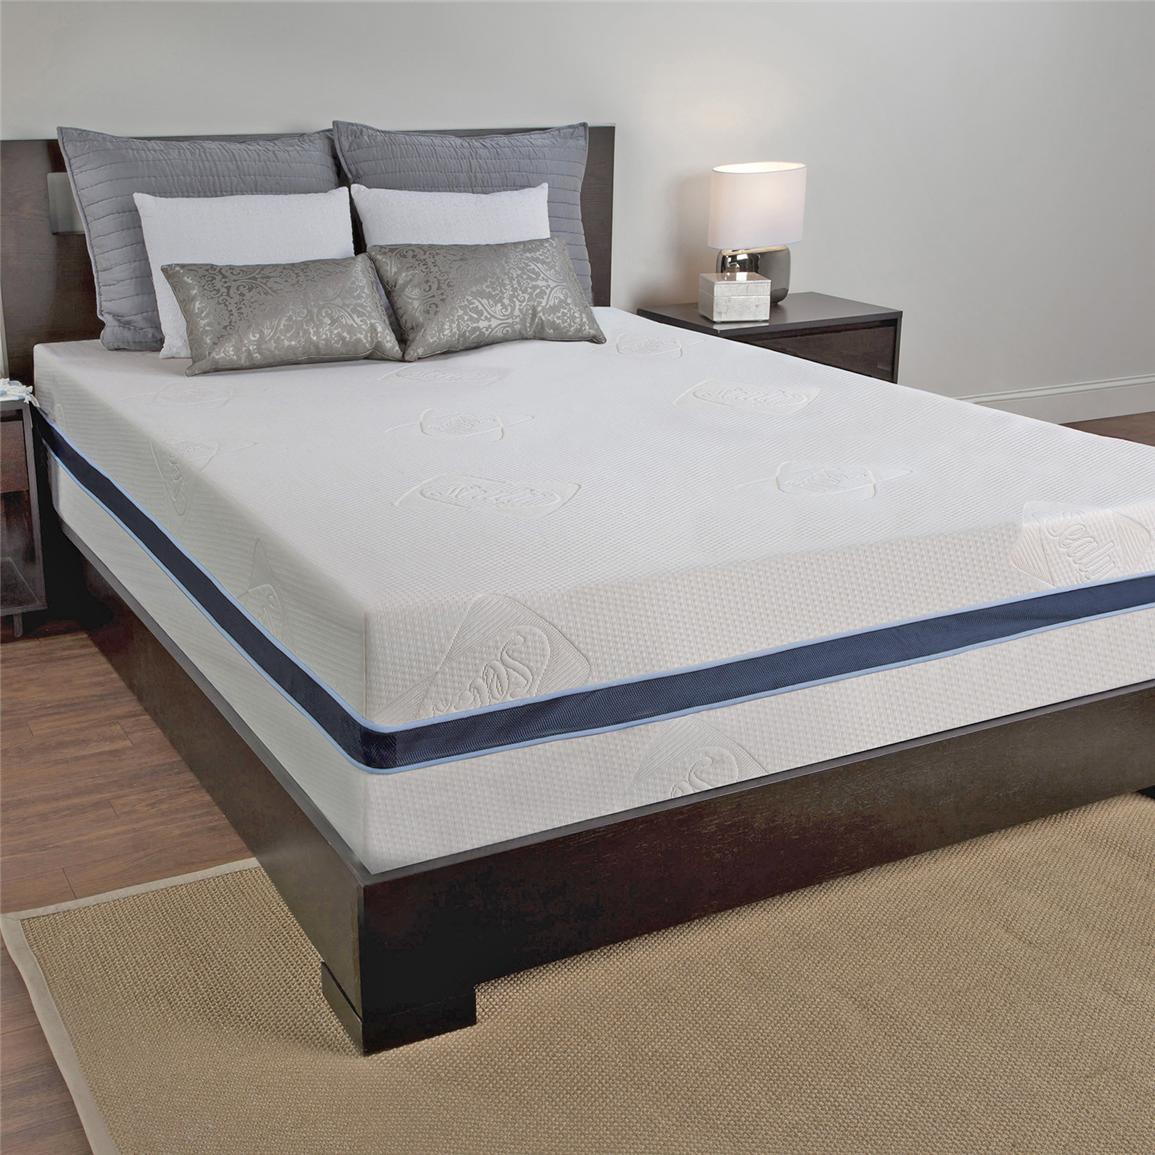 sealy-12-memory-foam-mattress-king-297310-mattresses-frames-at